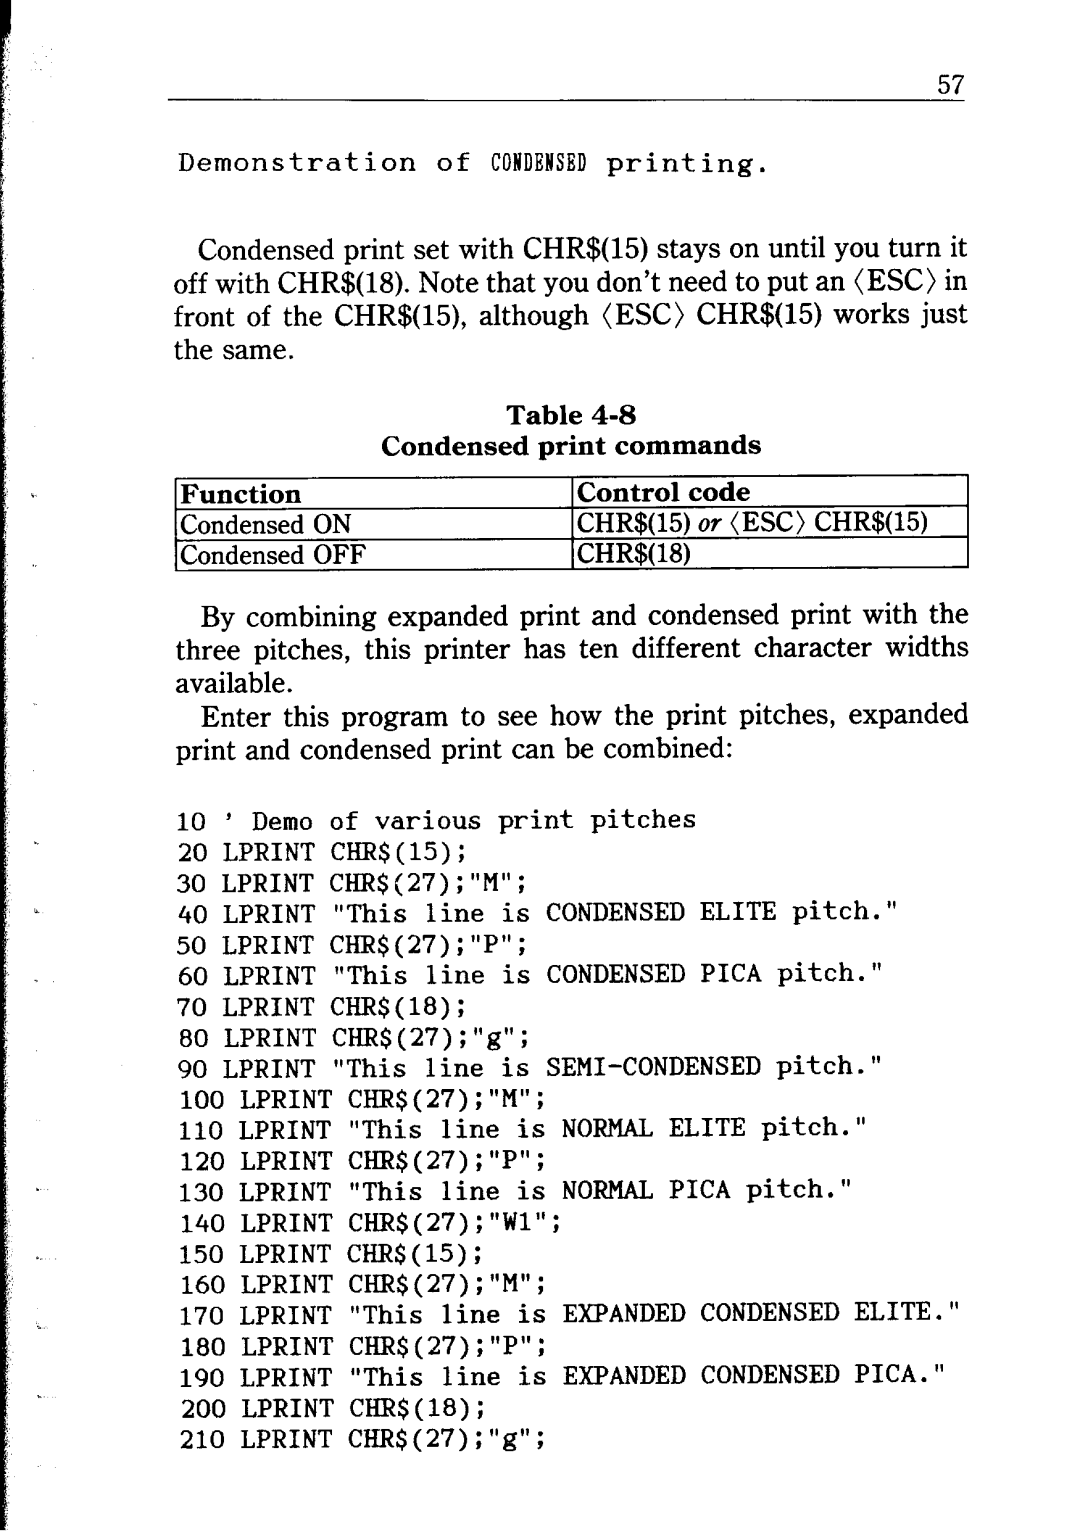 Star Micronics NB24-10/15 user manual Demonstrationof CONDENSEDprinting 